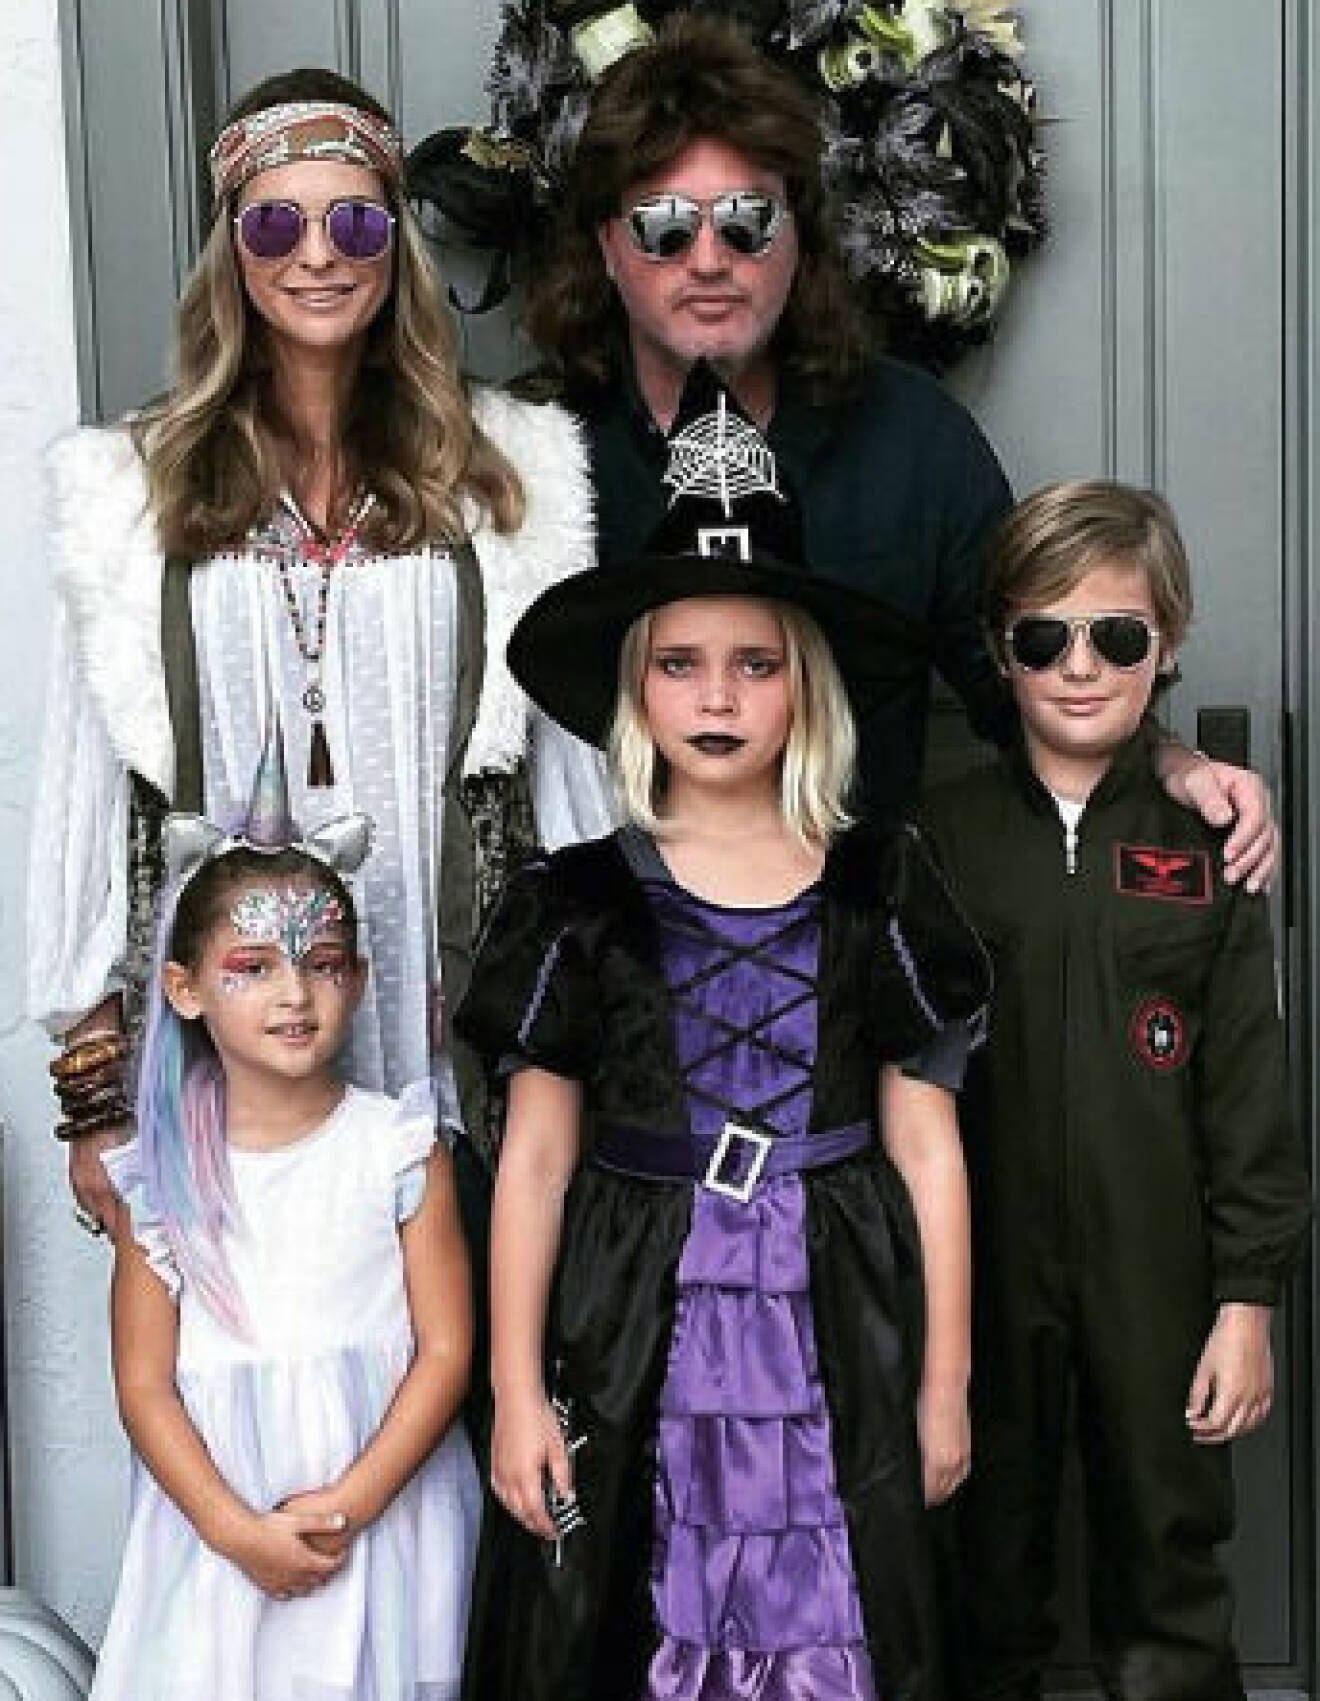 Prinsessan Madeleine och Chris O’Neill med sina barn prinsessan Adrienne, prinsessan Leonore och prins Nicolas på Halloween 2022